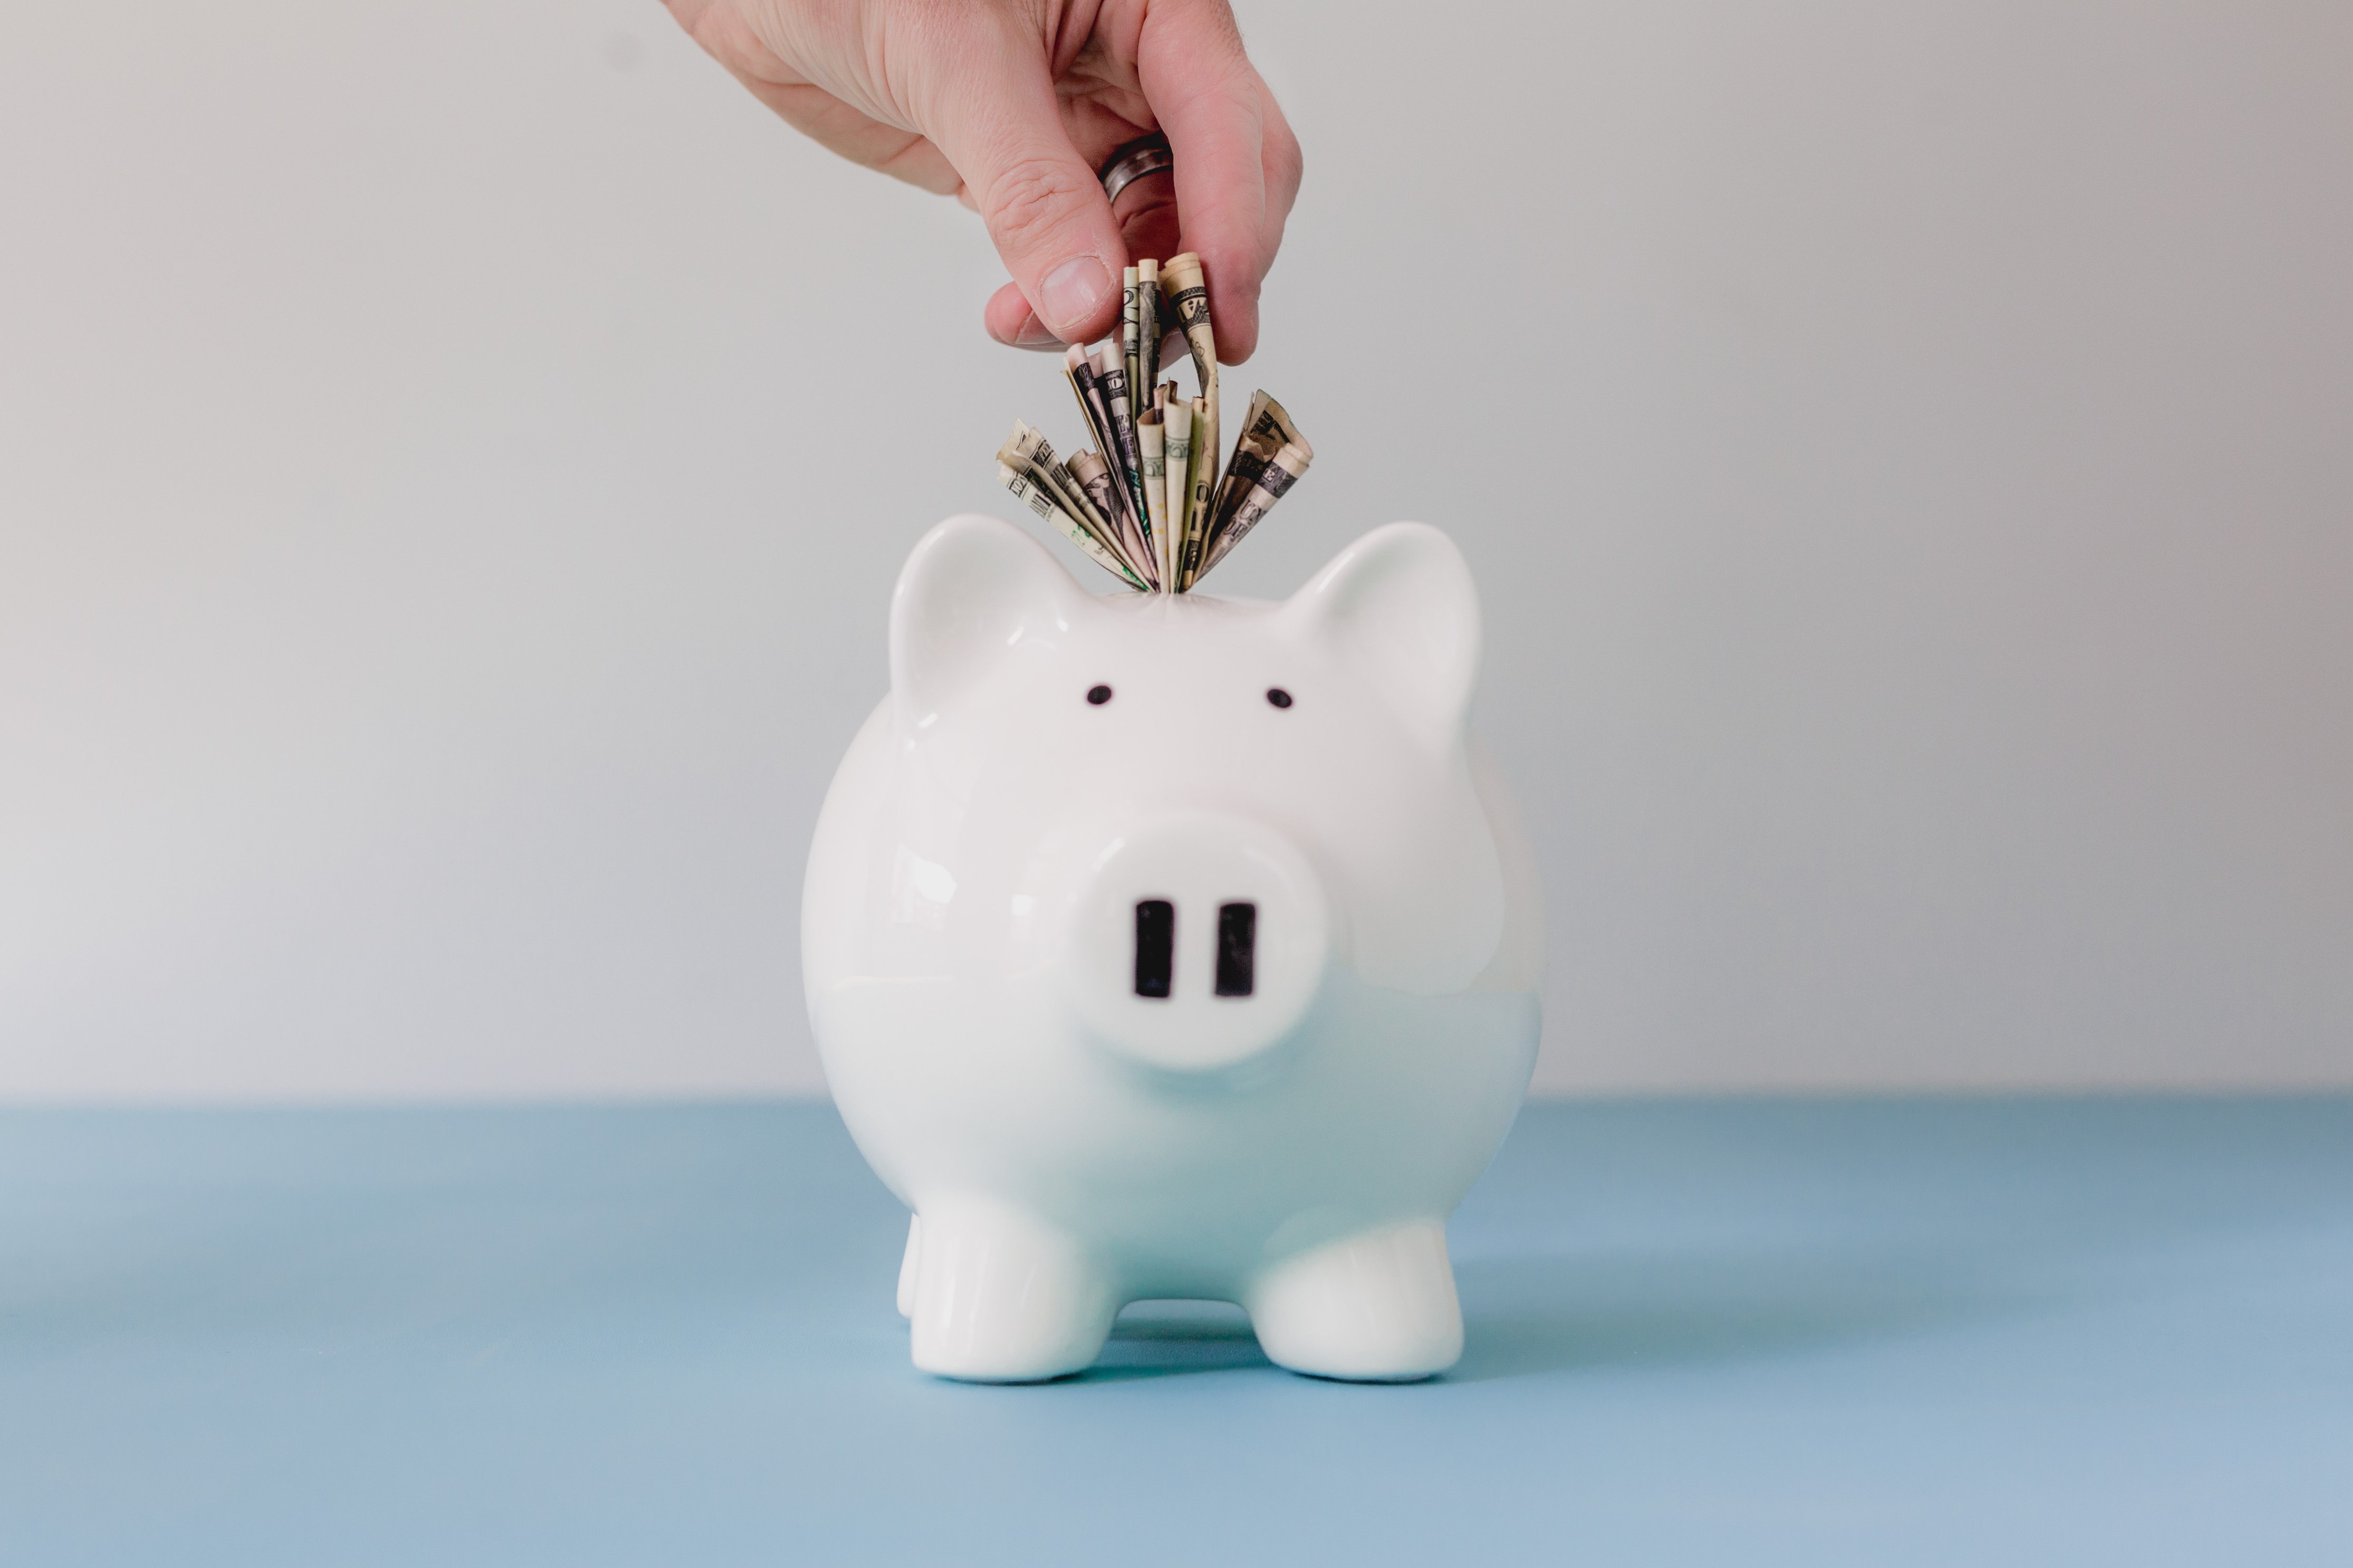 keys for raising financially responsible children - hand stuffing dollar bills into a piggy bank